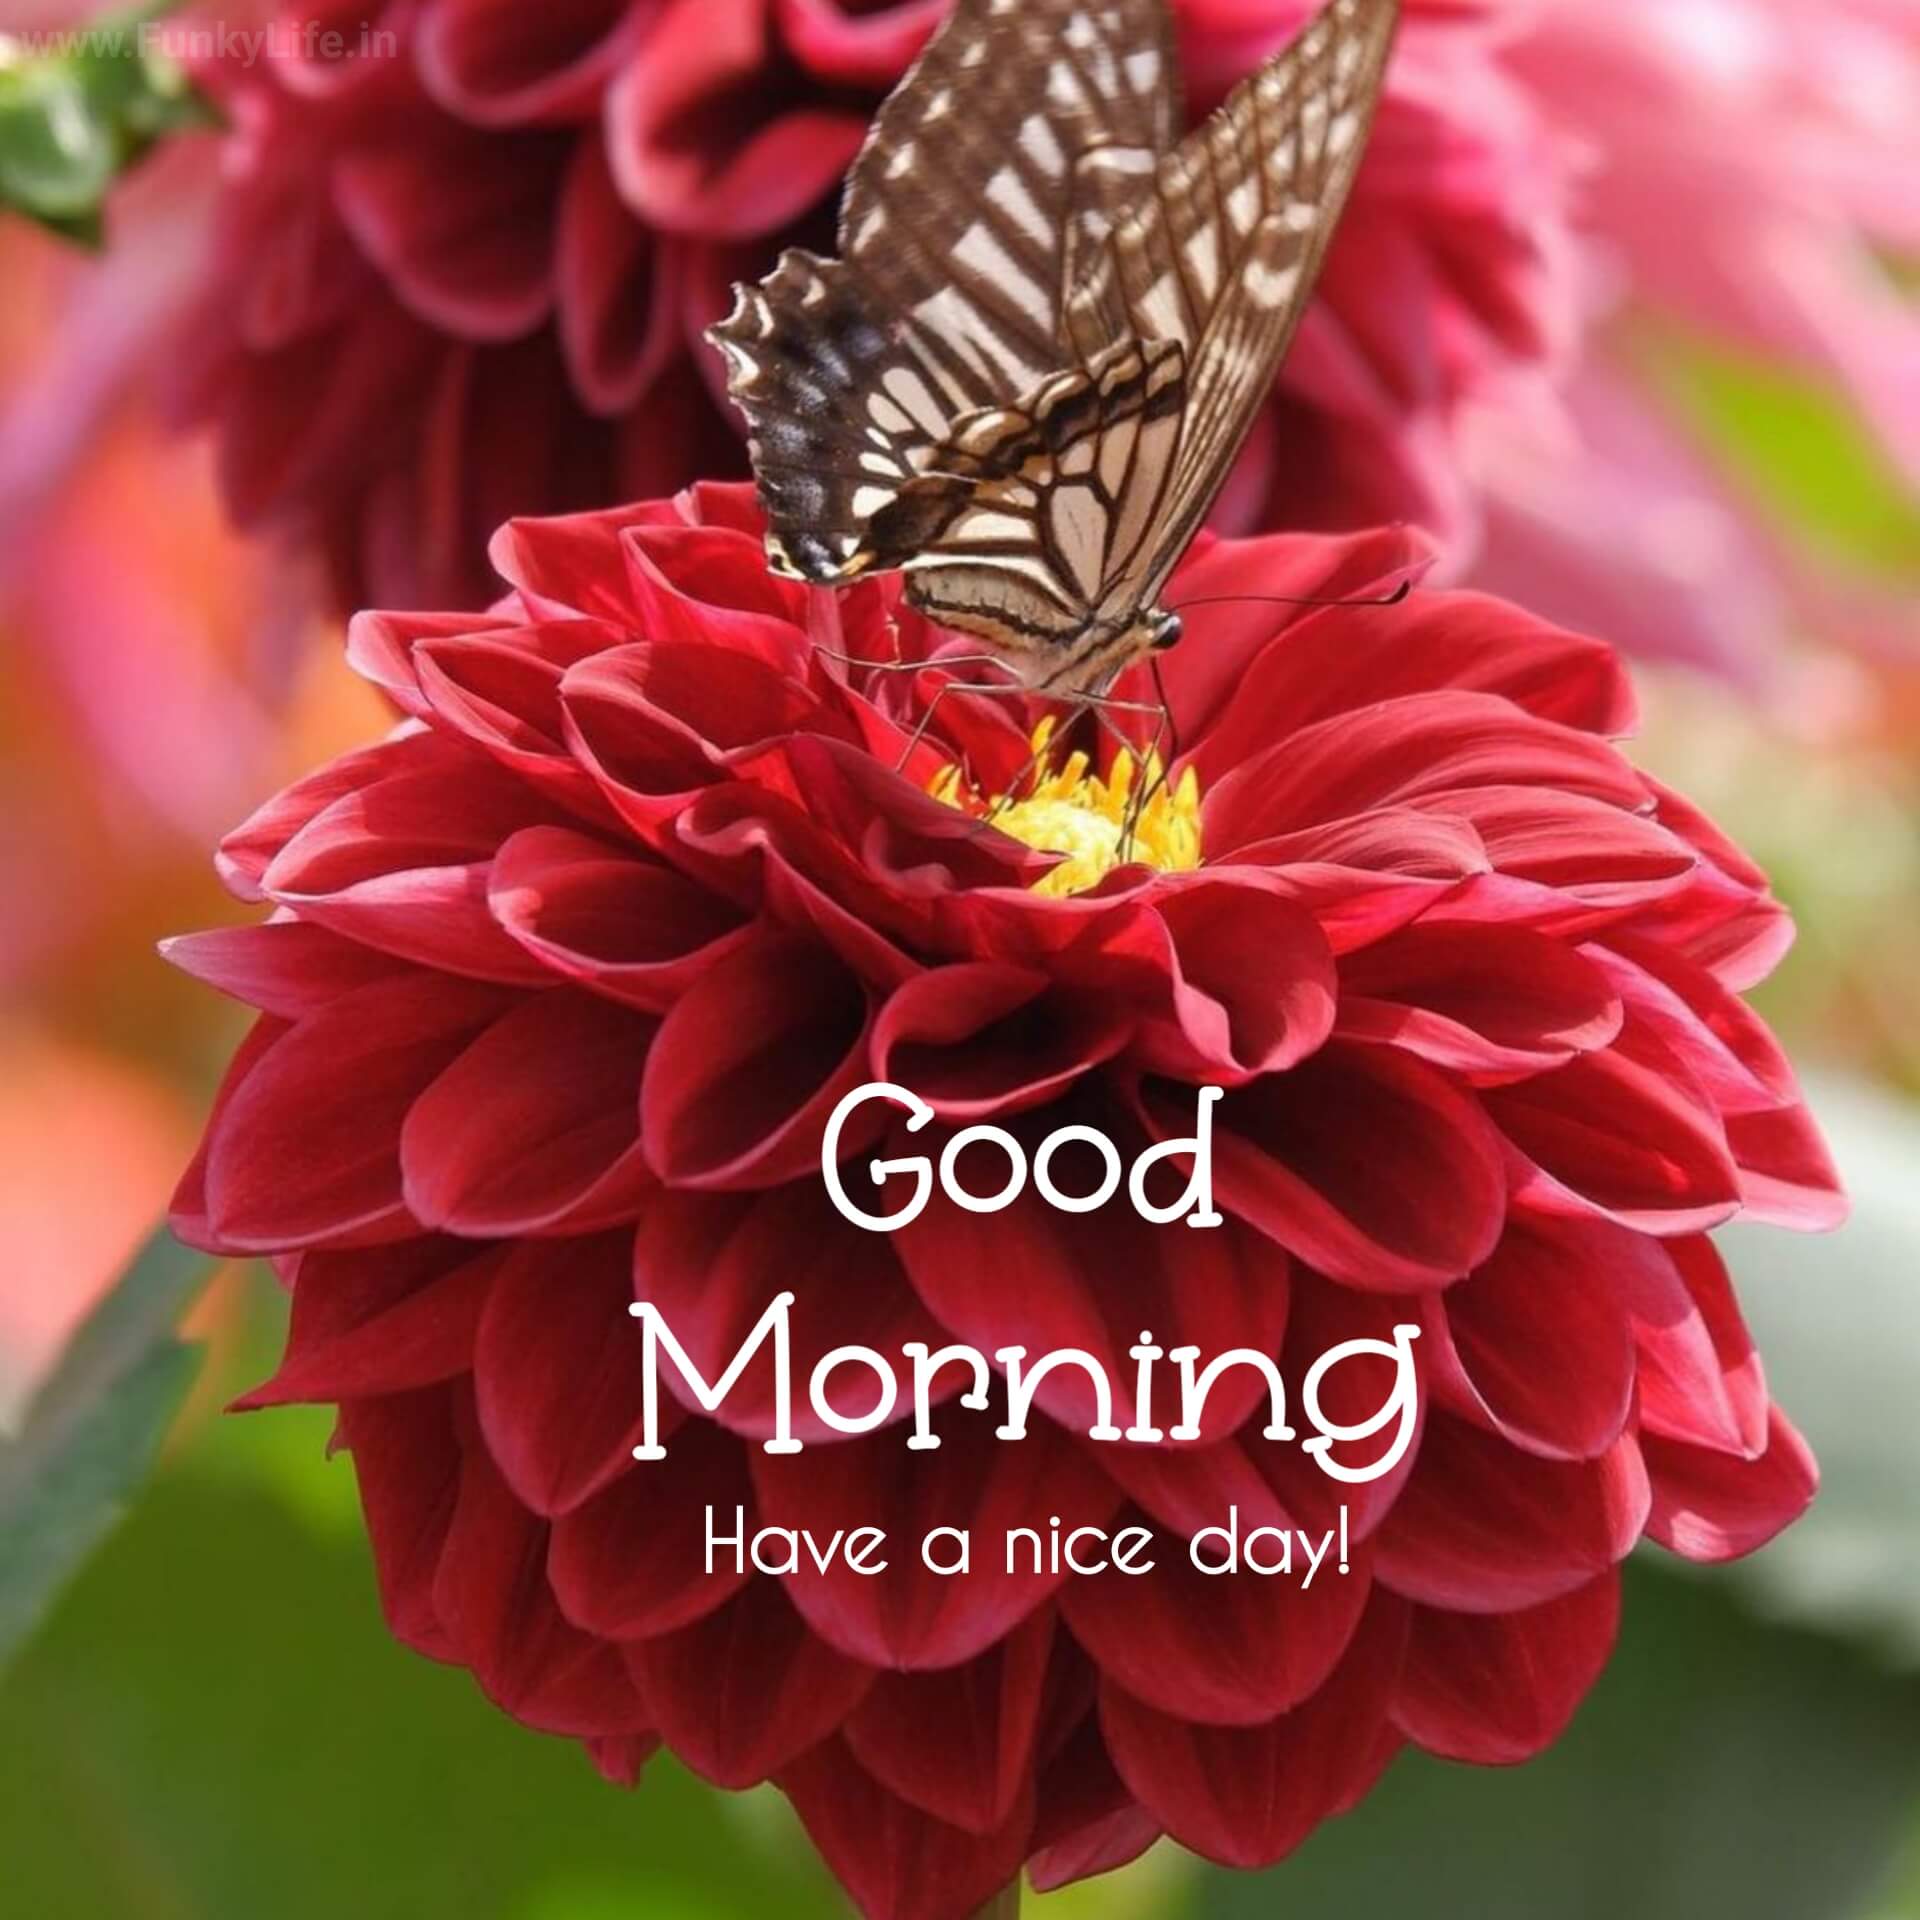 Red Flower Good Morning Image